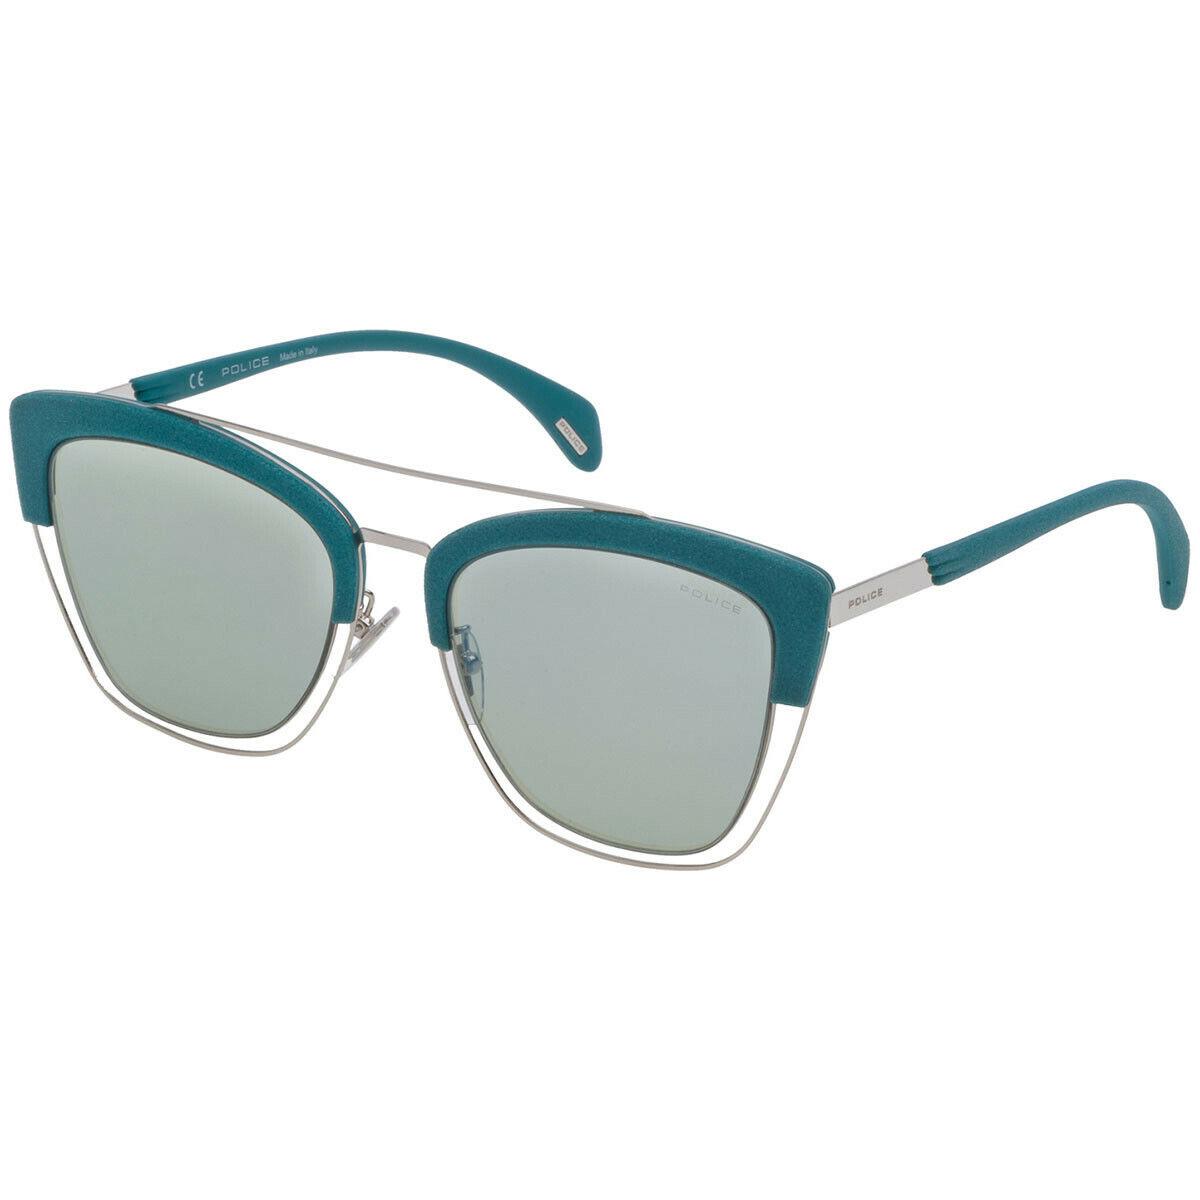 Police Sunglasses Sparkle 6 SPL618 579X Shiny Palladium /green 54 mm - Green